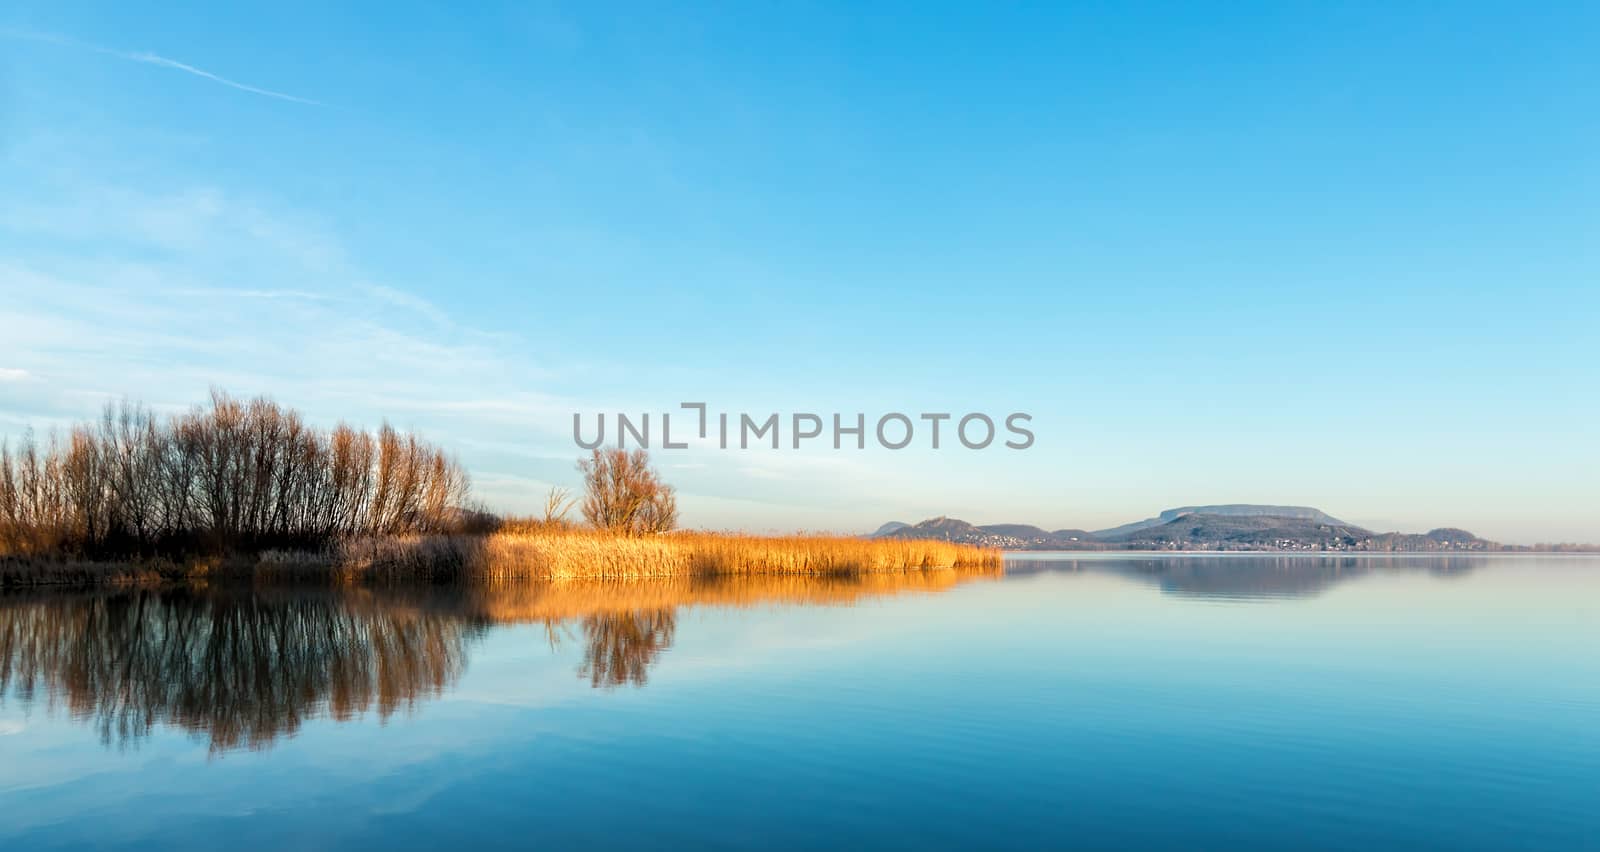 Landscape from Hungary from the lake Balaton